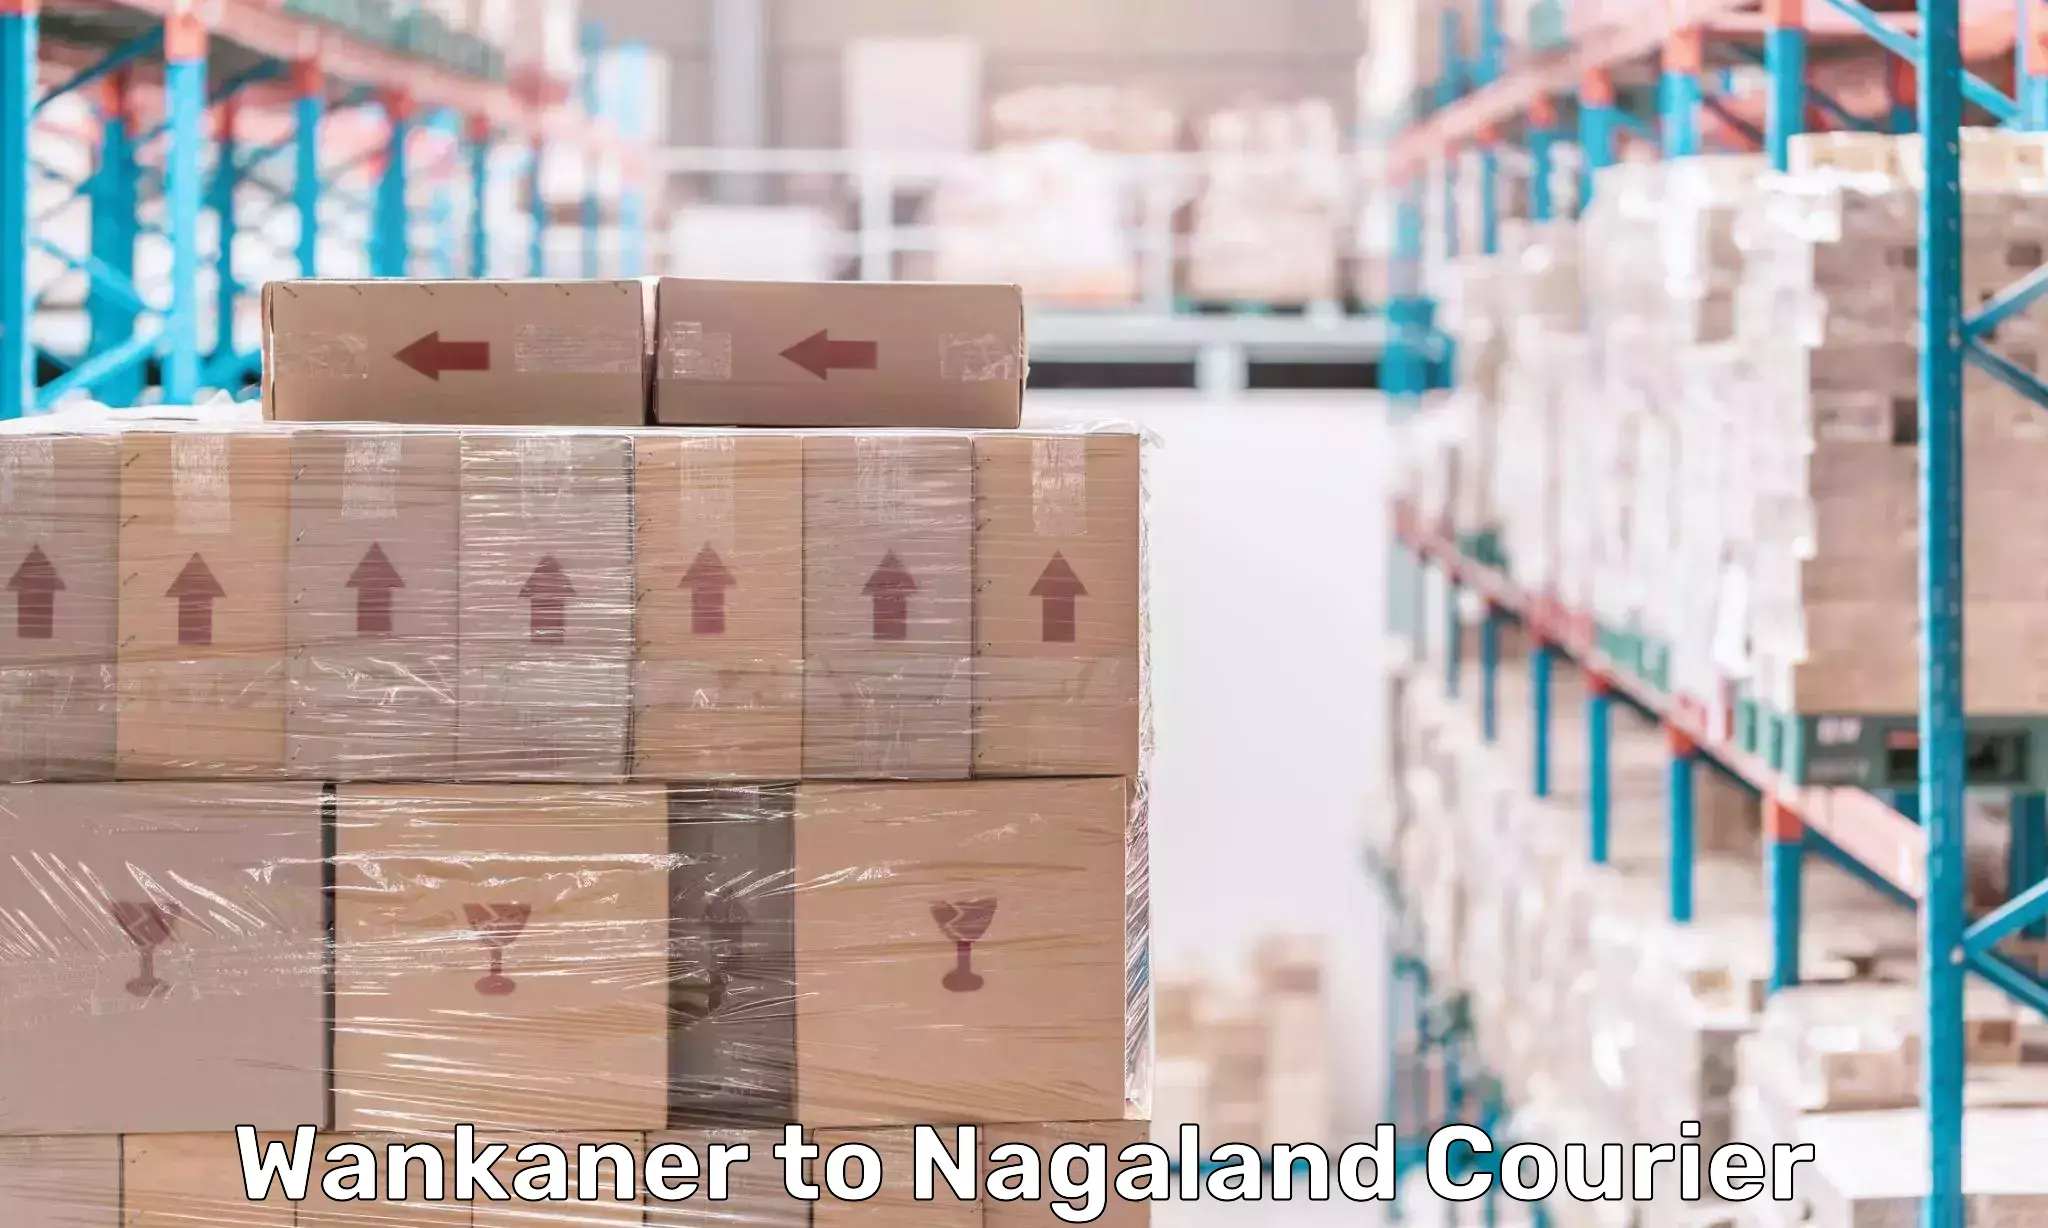 Global logistics network Wankaner to Dimapur